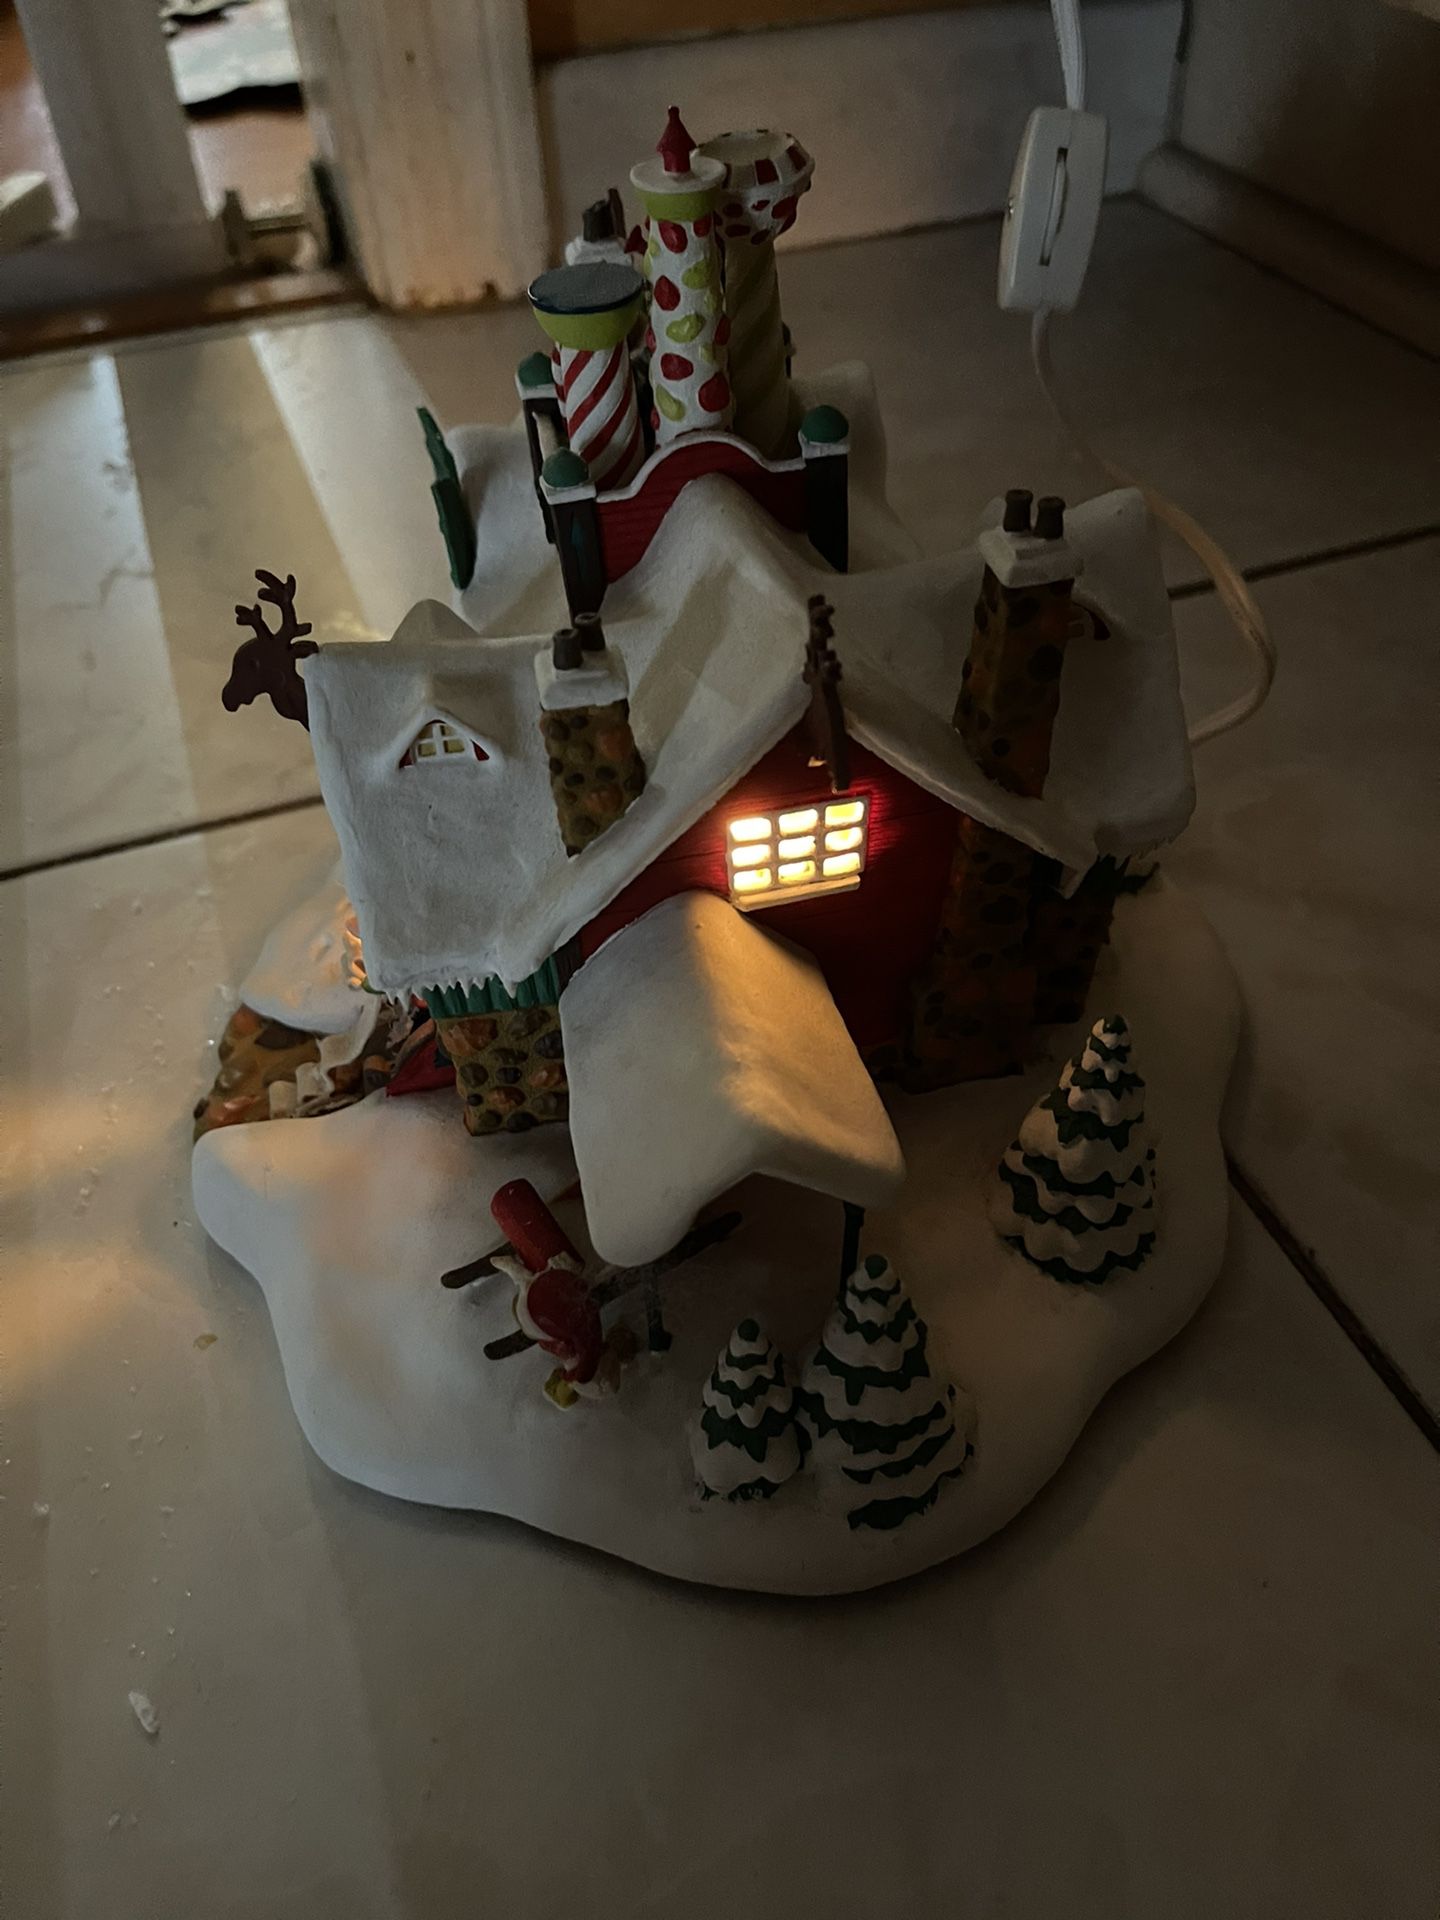 Danbury Mint Disney Winter Wonderland Santa’s Workshop